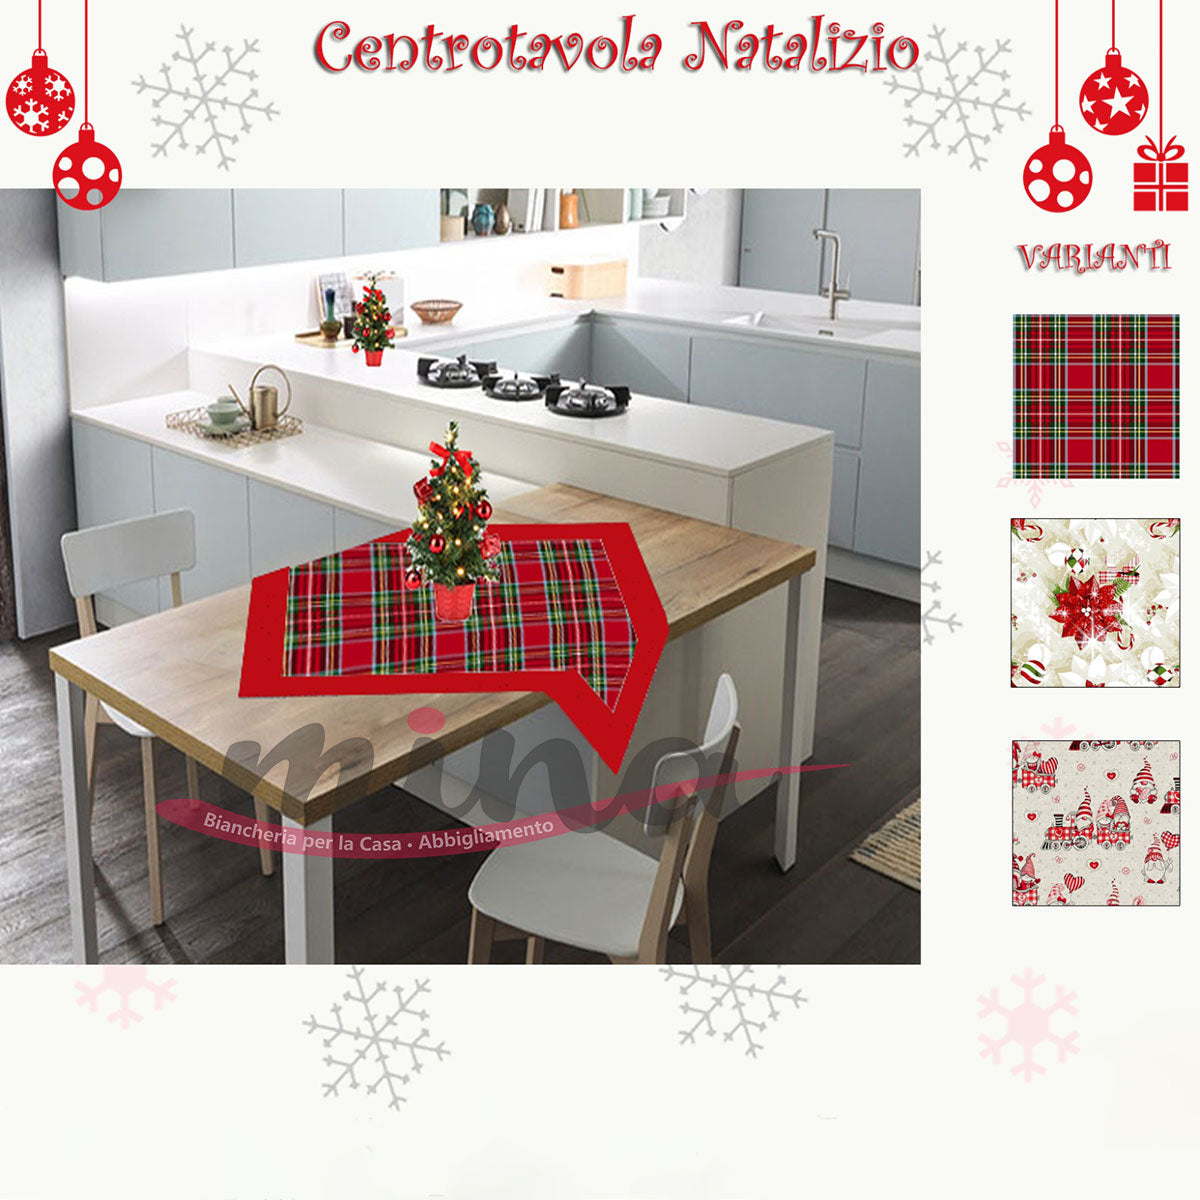 Centrotavola quadrato cotone fantasia NATALIZIA 90cm X 90cm vari colori Made in Italy 0420, natale